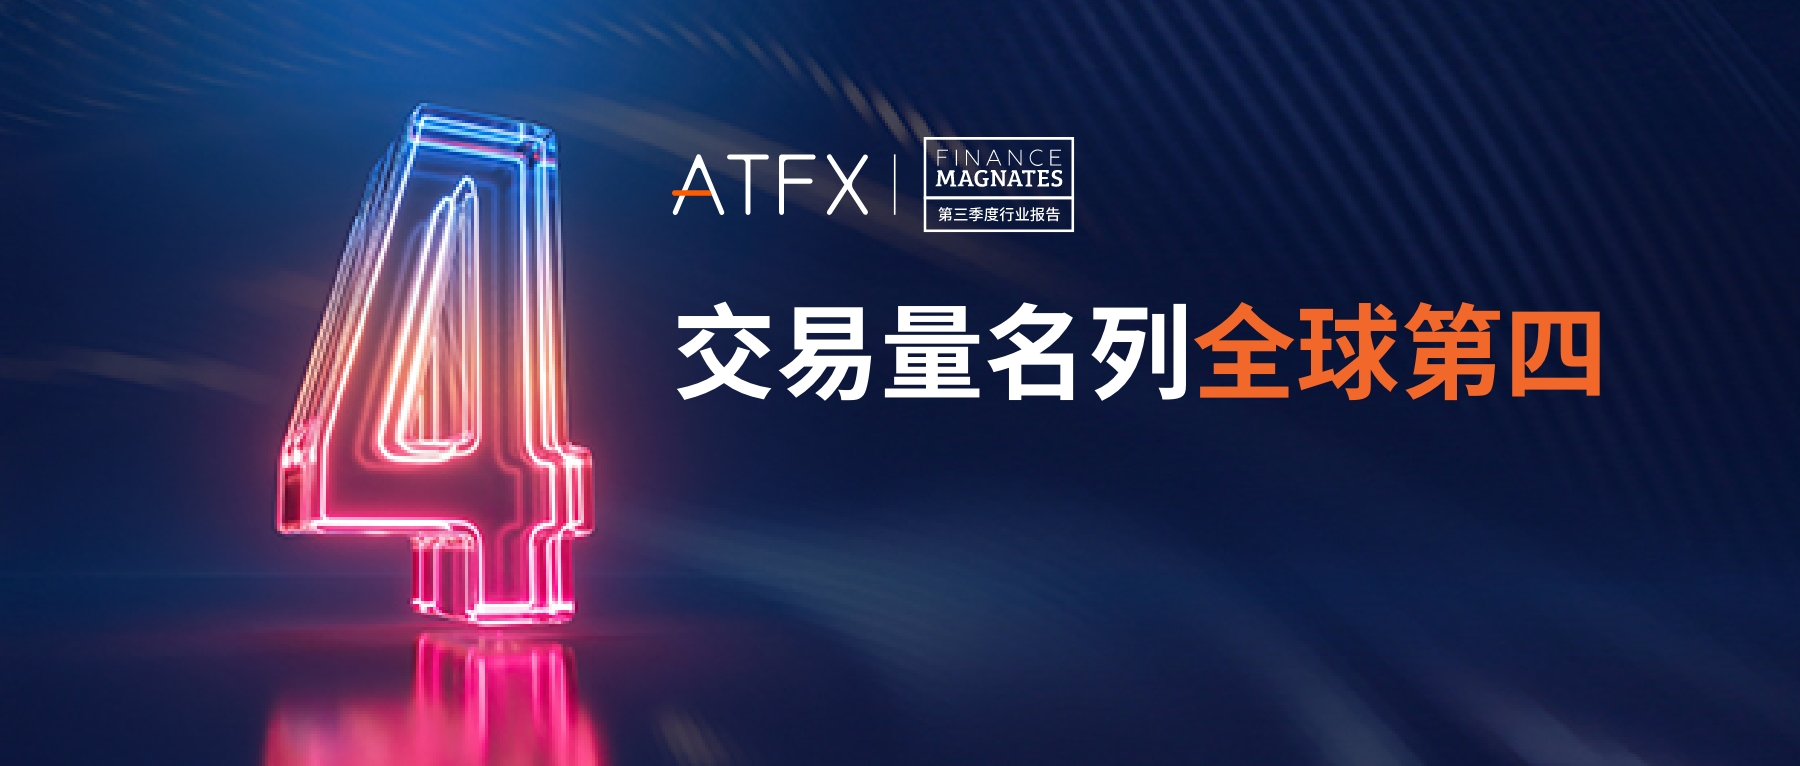 ATFX Q3 交易量爆炸式增长，活跃用户增长6.67%，全球排名跃升至第四名